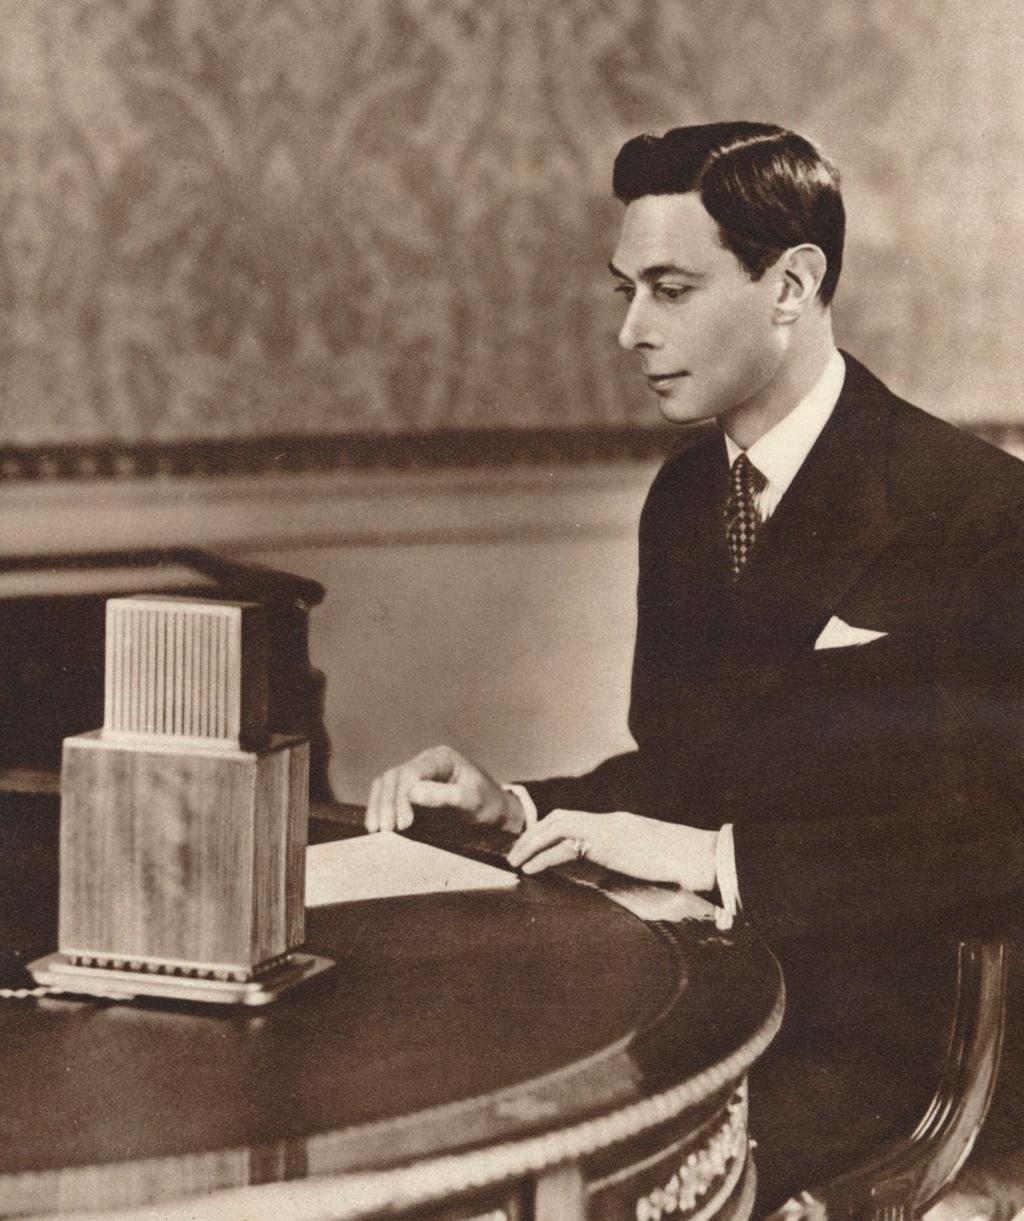 King George VI giving a radio speech